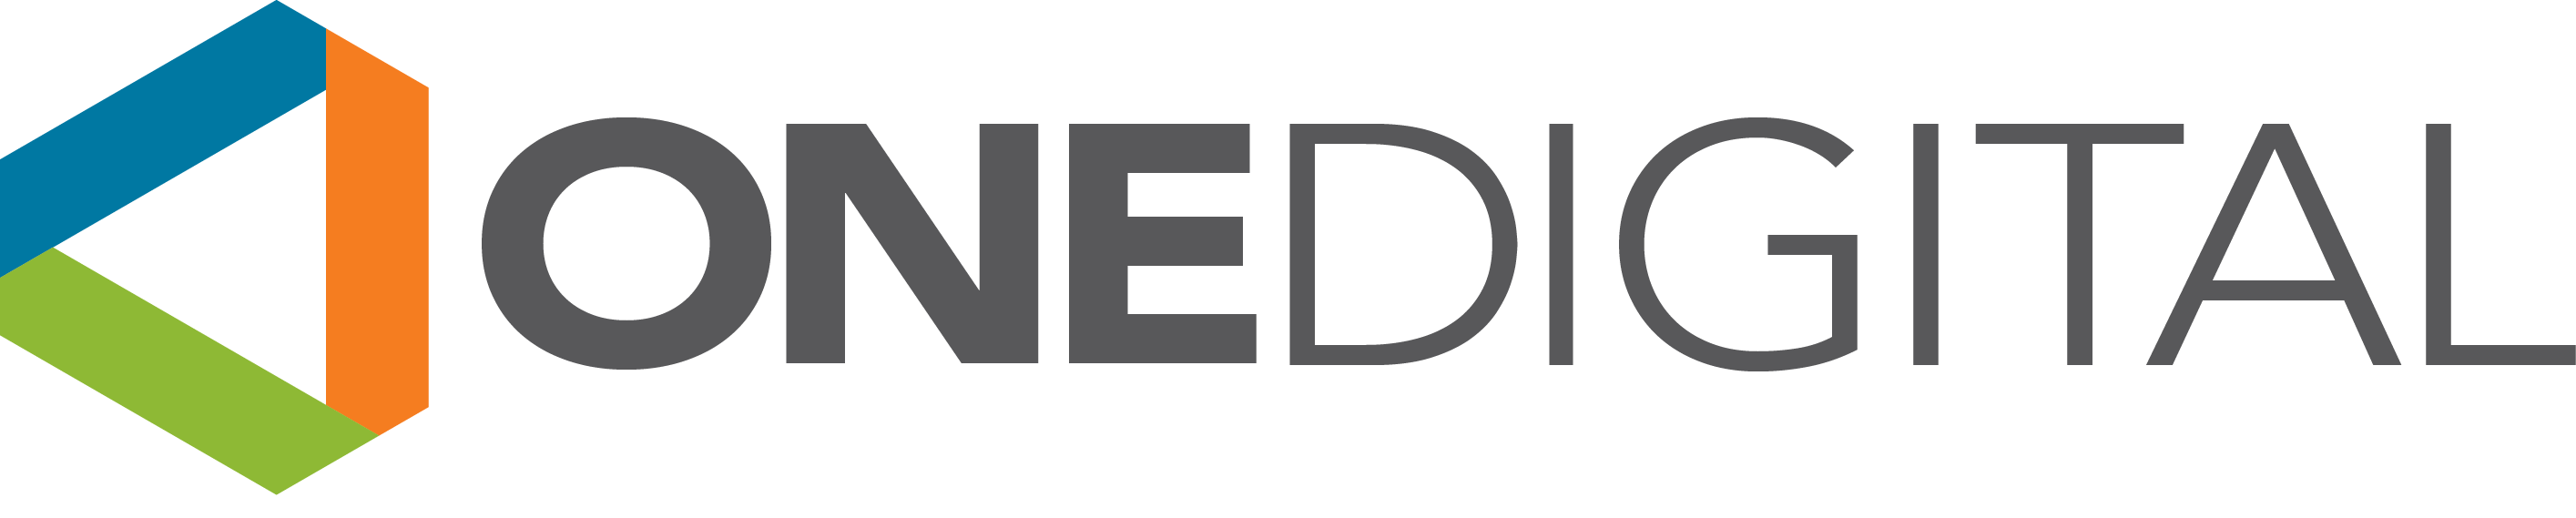 OneDigital Tennessee Company Logo